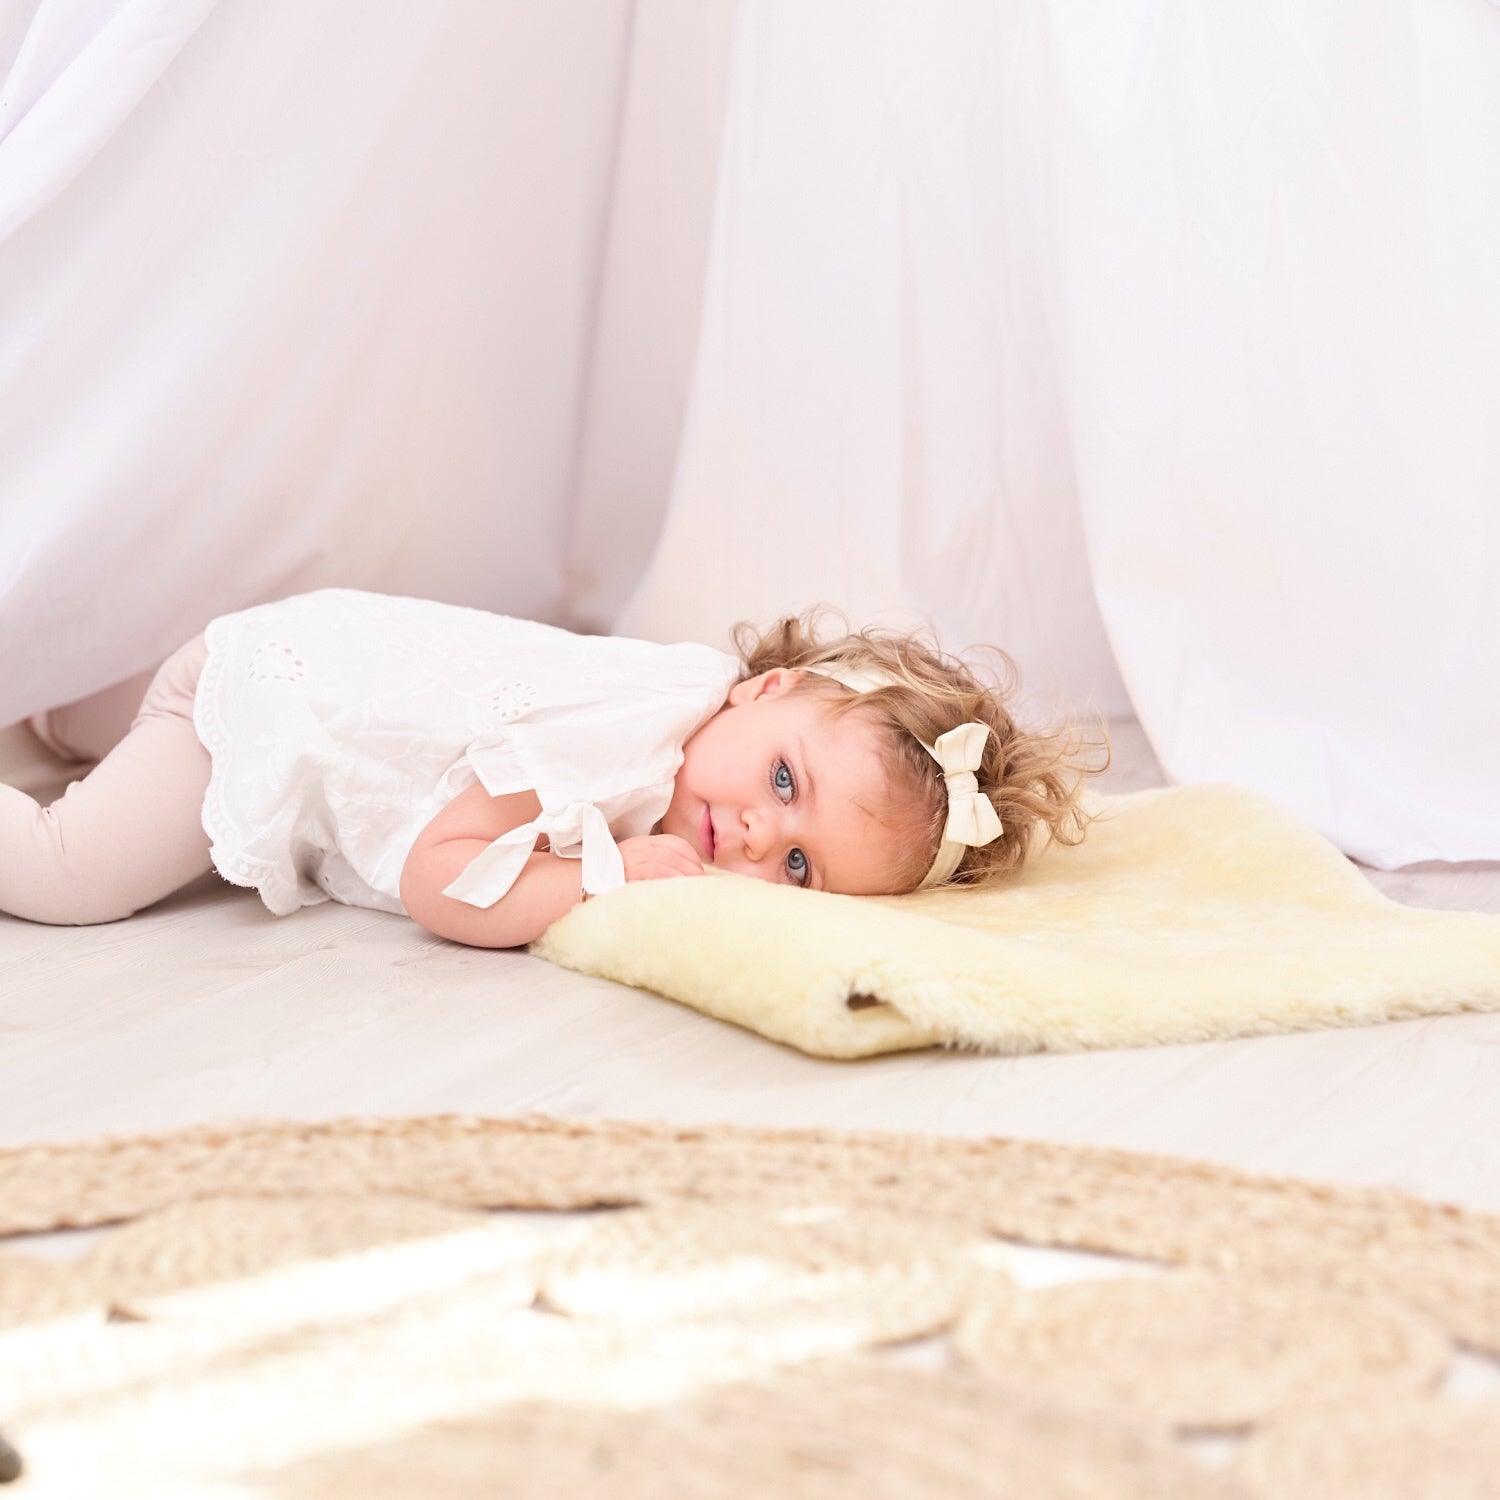 Sheepskin Baby Rug - Naturally Sheepskins baby lying on rug